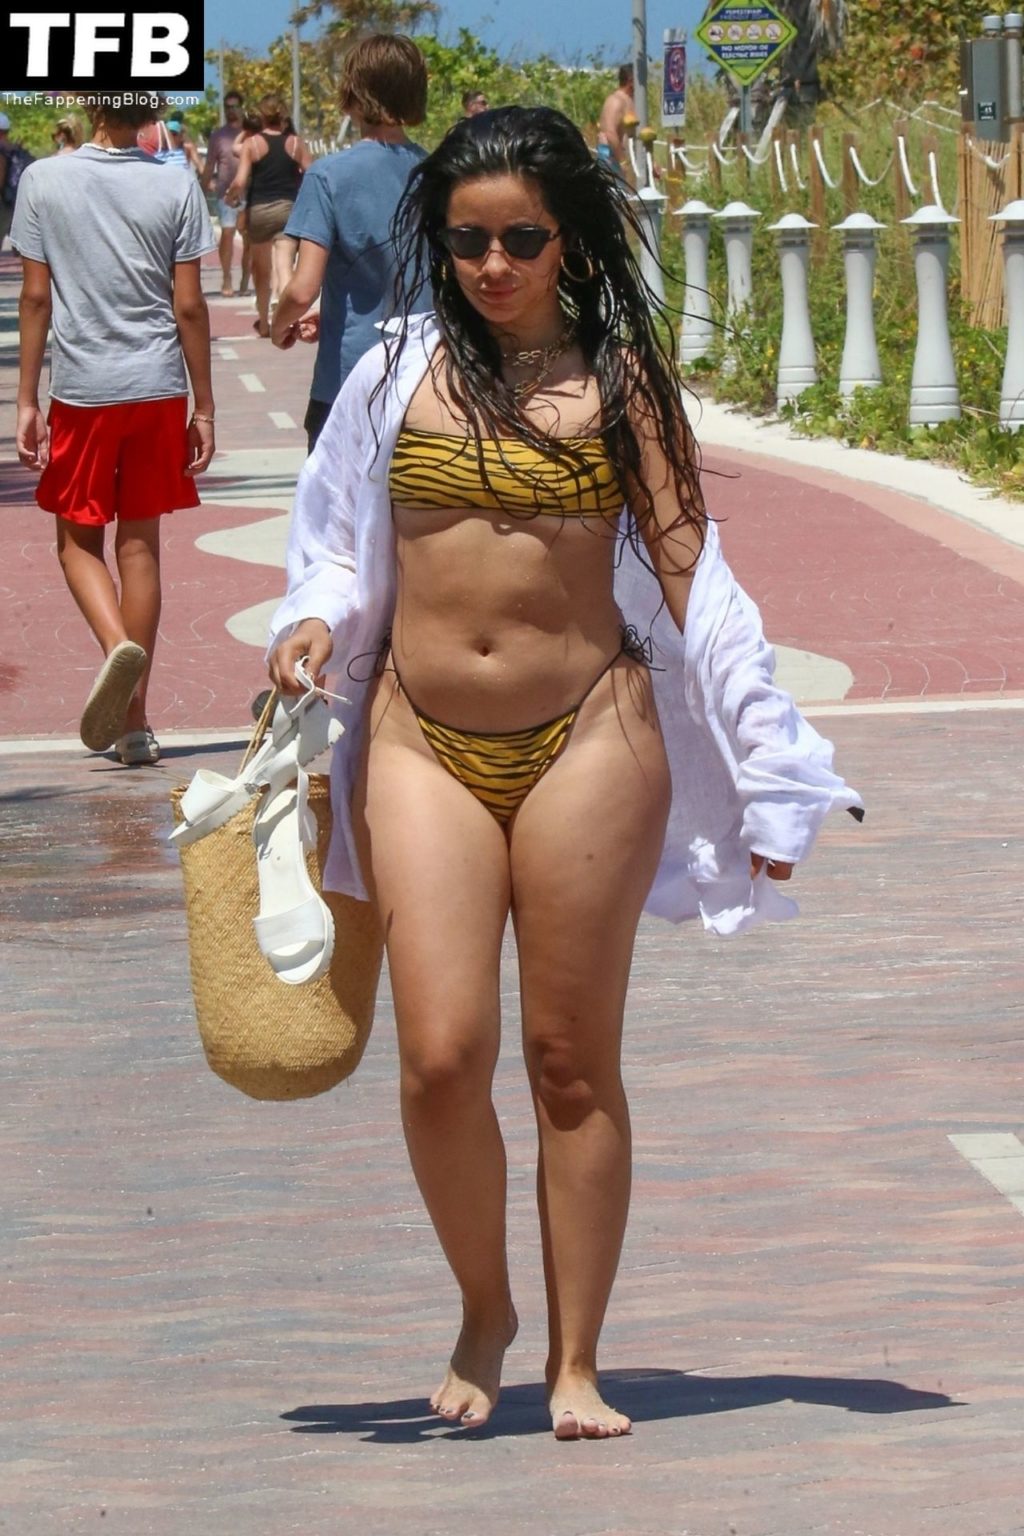 Camila Cabello Sexy The Fappening Blog 107 1024x1536 - Camila Cabello Displays Her Summer-Ready Body in Miami (108 Photos)